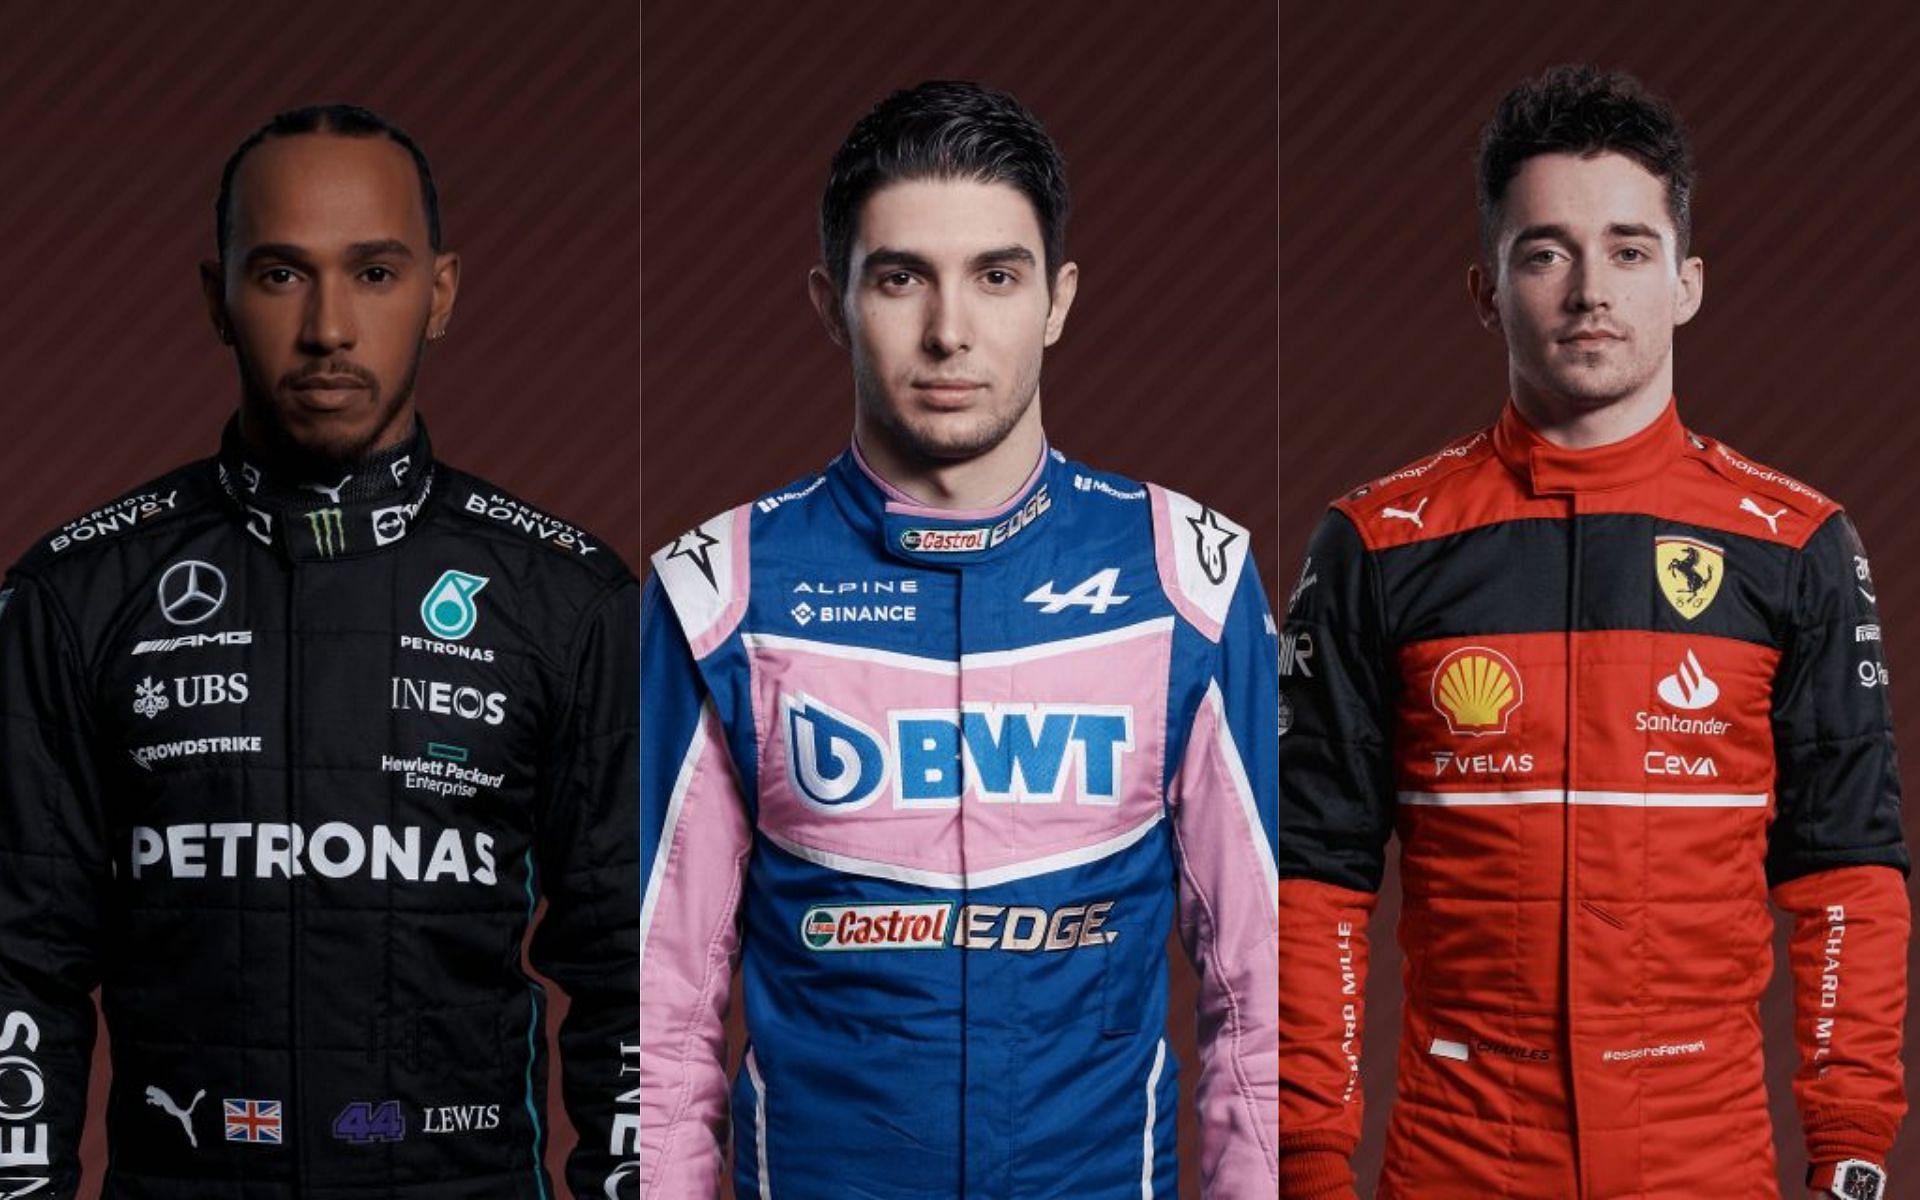 Lewis Hamilton (left), Esteban Ocon (middle), Charles Leclerc (right) - Via formula1.com